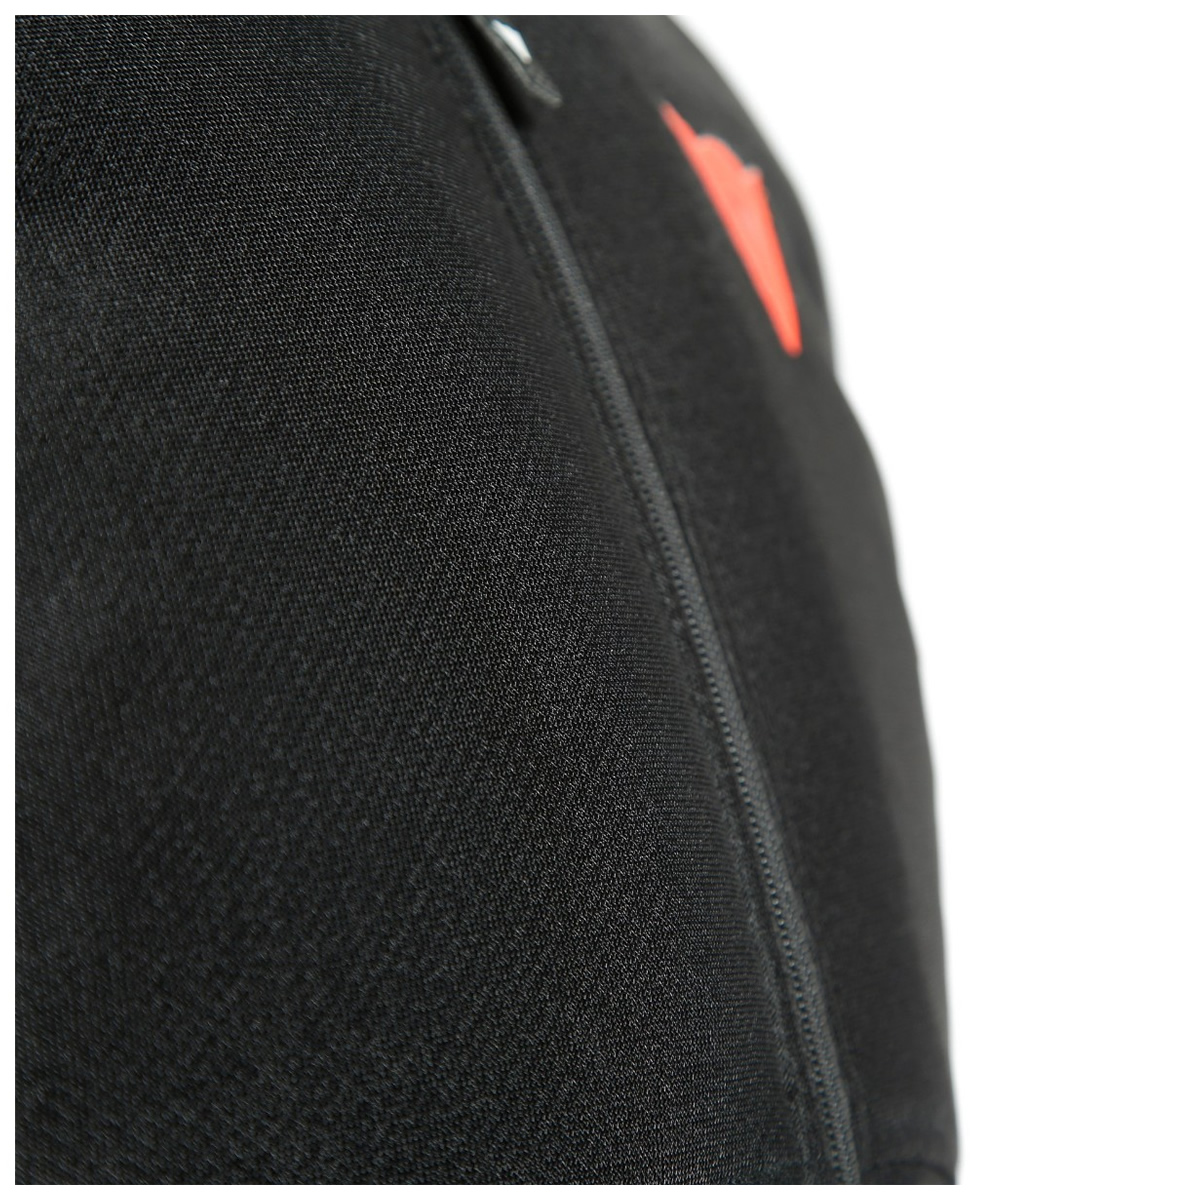 Dainese Protektorenjacke Pro-Armor Safety Jacket 2.0, schwarz